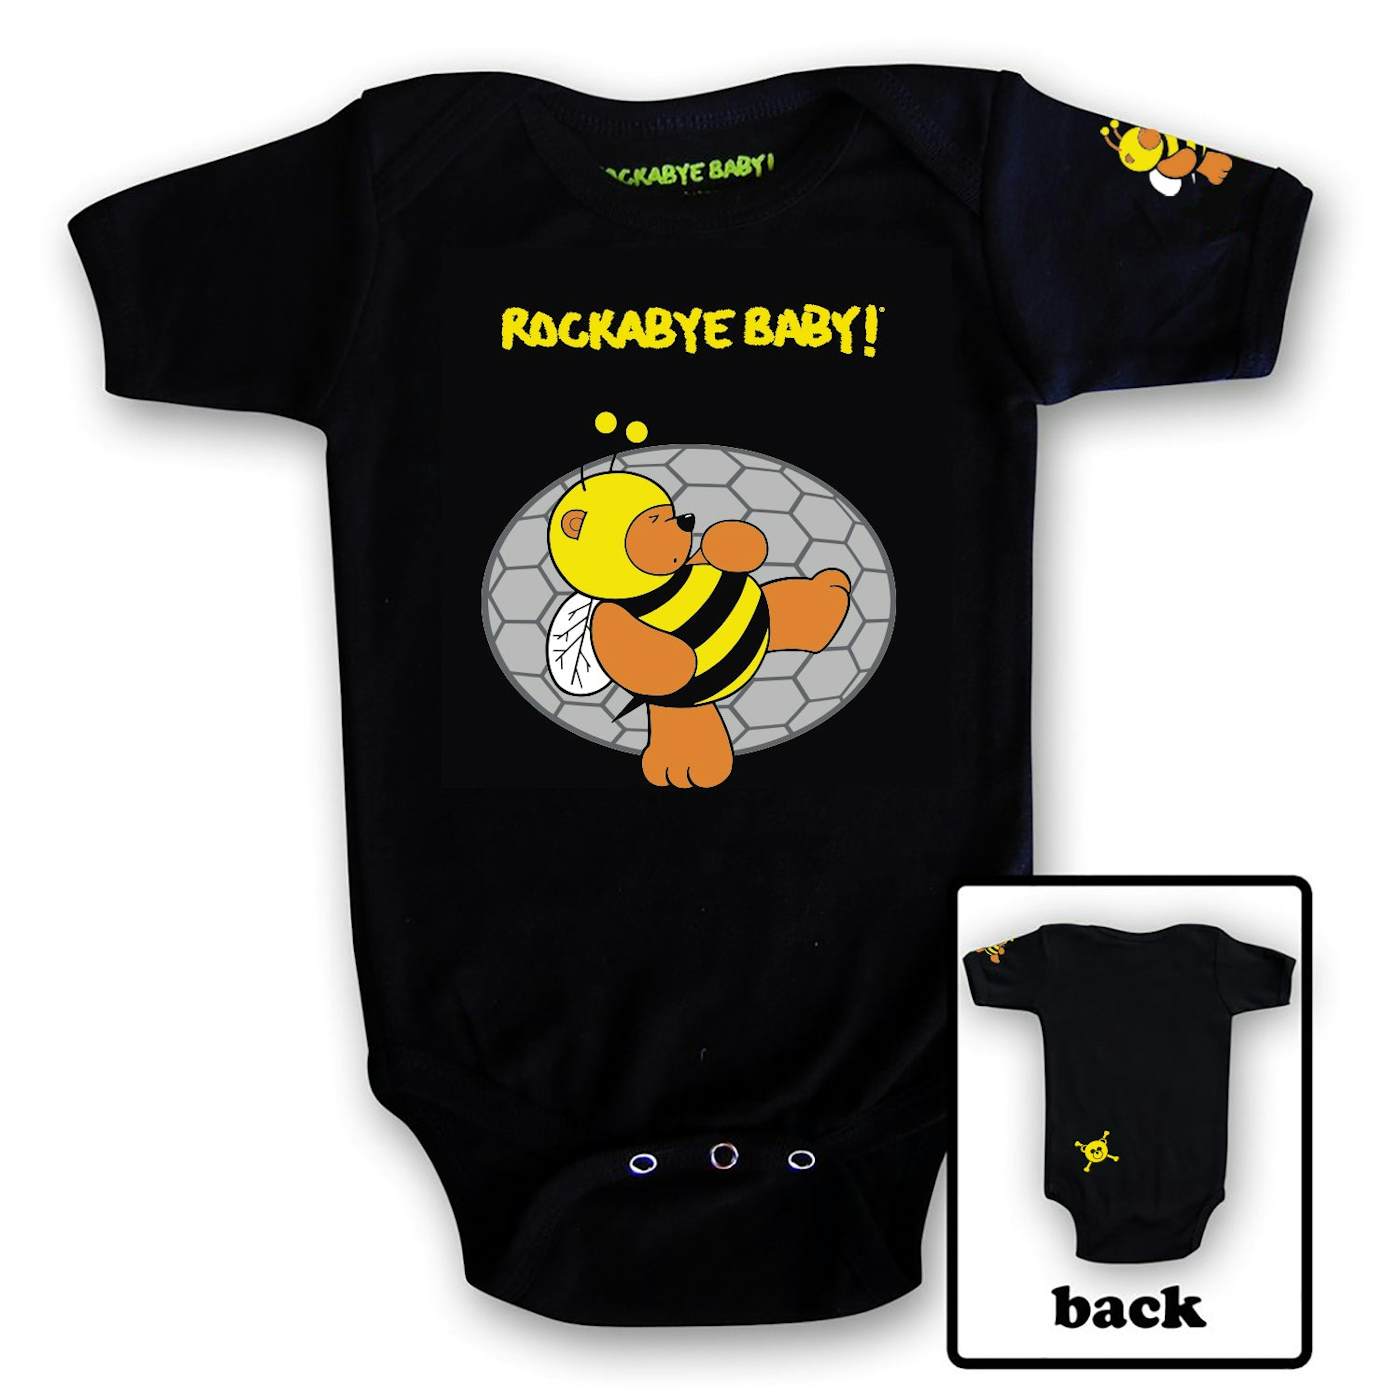 Rockabye Baby! Organic Baby Bodysuit ("Lullaby Renditions of Wu-Tang Clan" Album Art on Black or White)